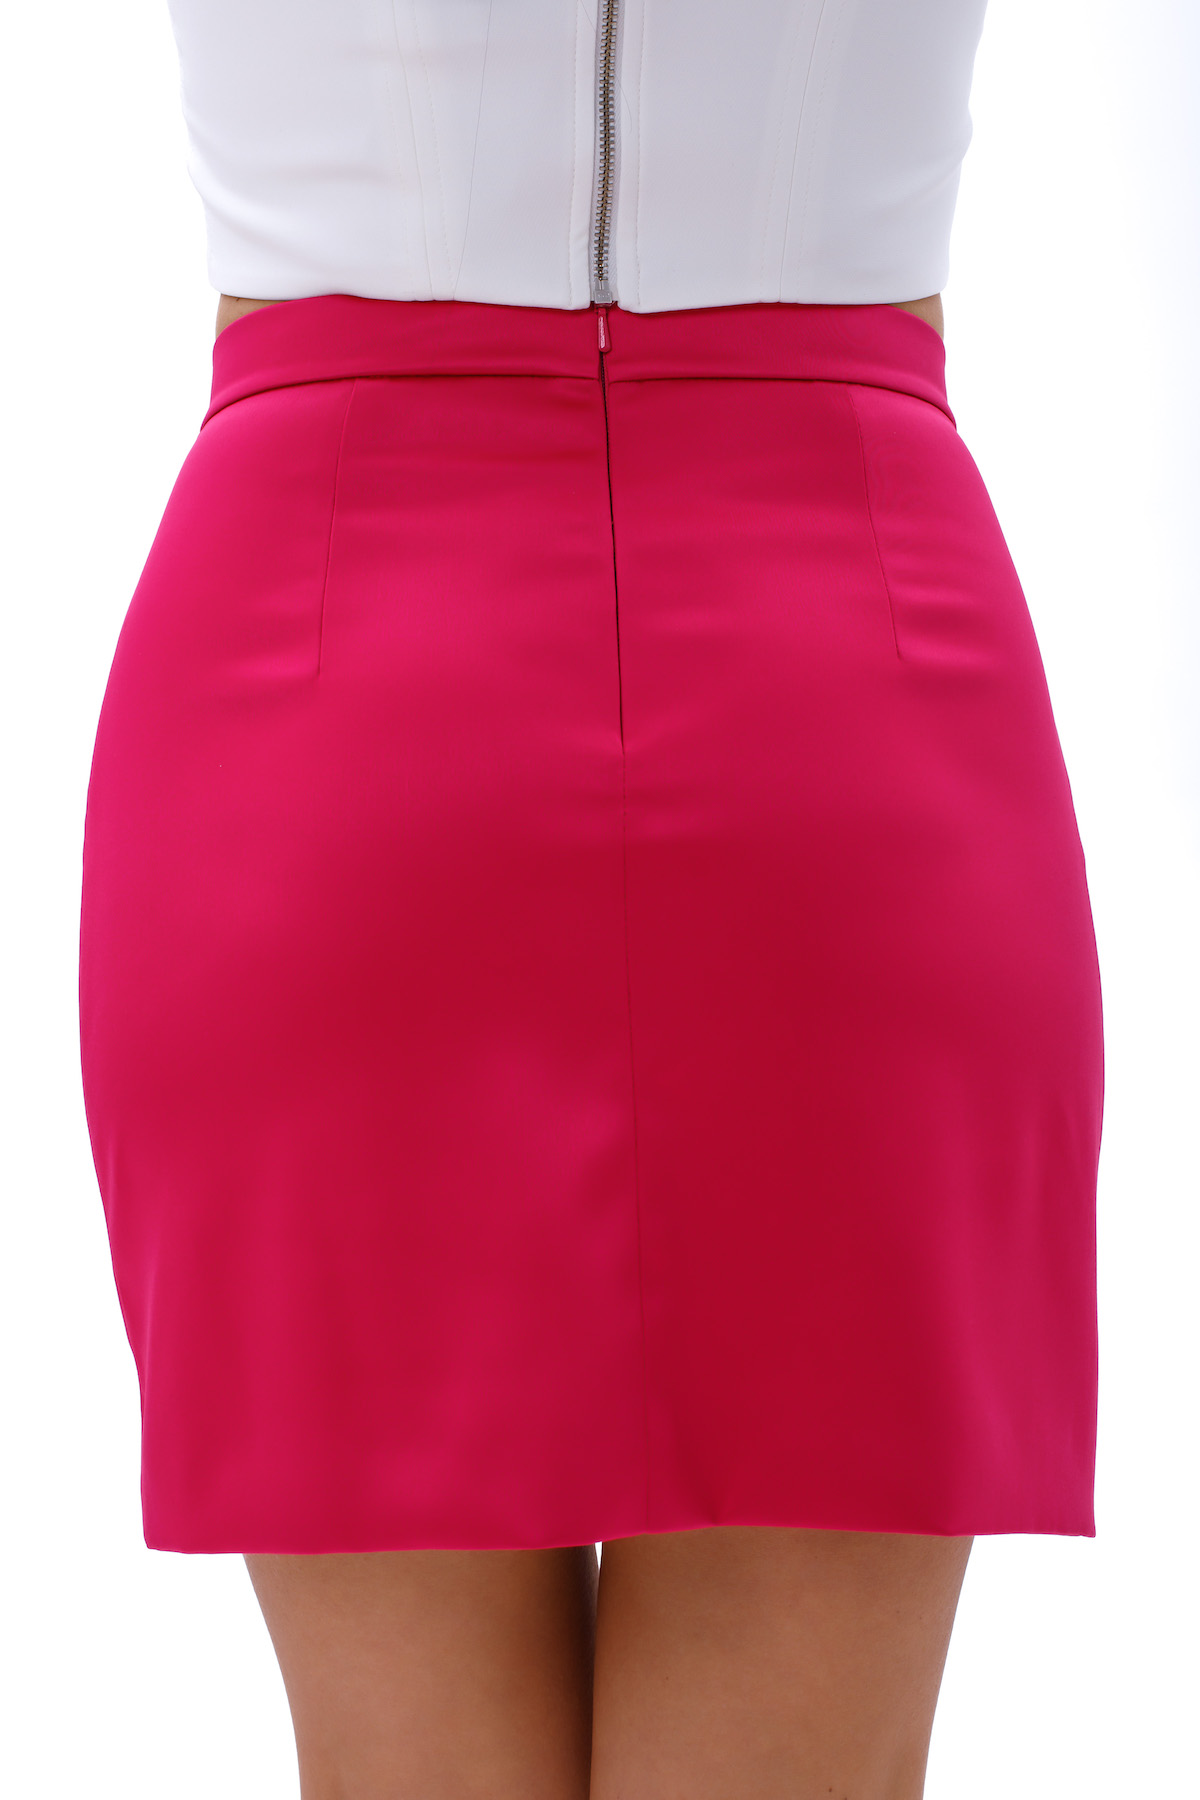 Autumn Pleated Mini Skirt Short Skirt Skort With Underpants High Waist Jk  A-line Skirt Black White Pink Skirt Blue - Skirts - AliExpress